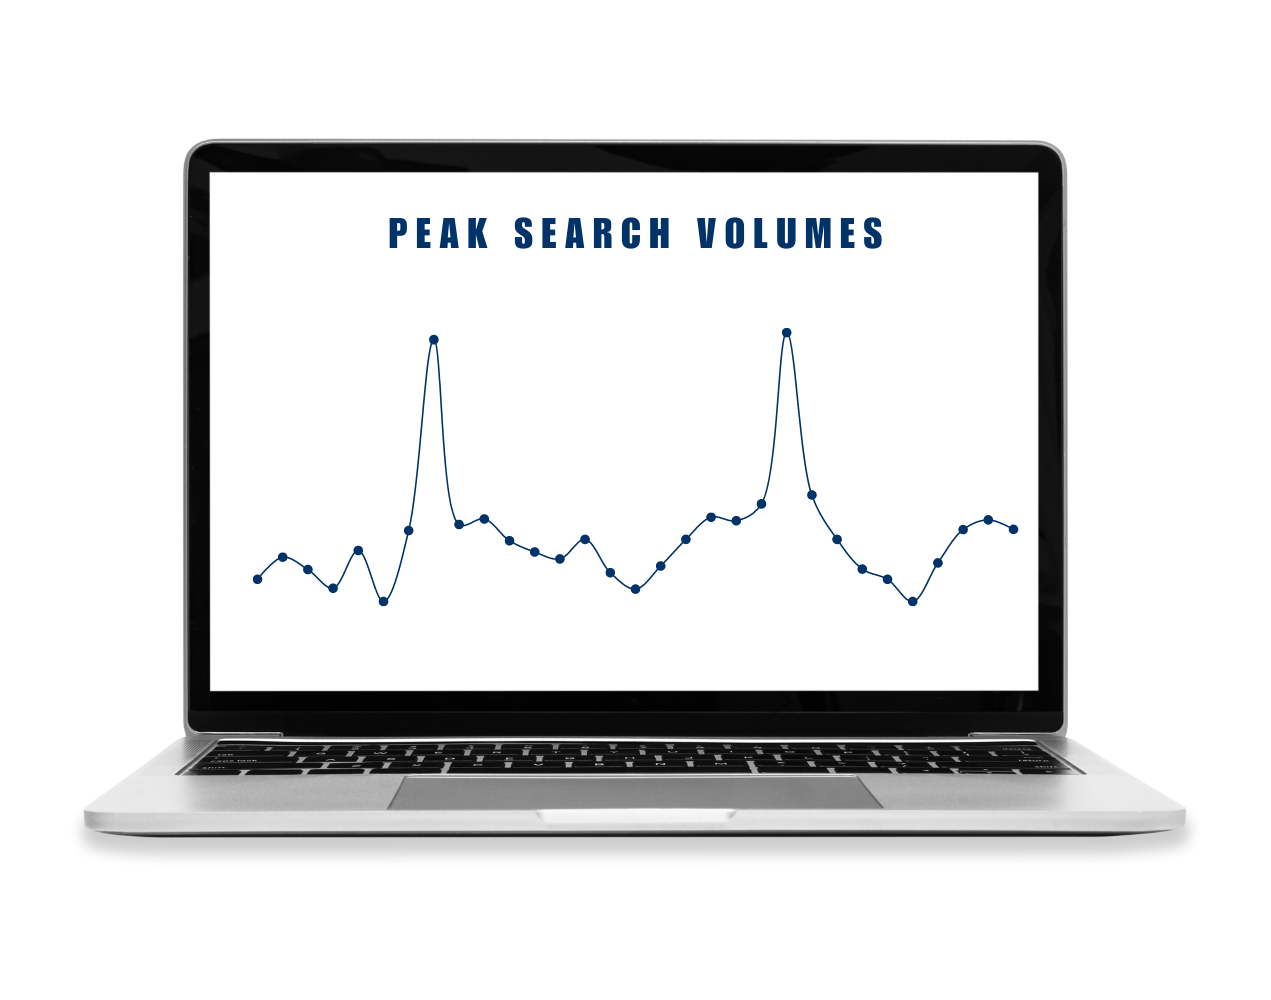 Publish content during peak search volumes